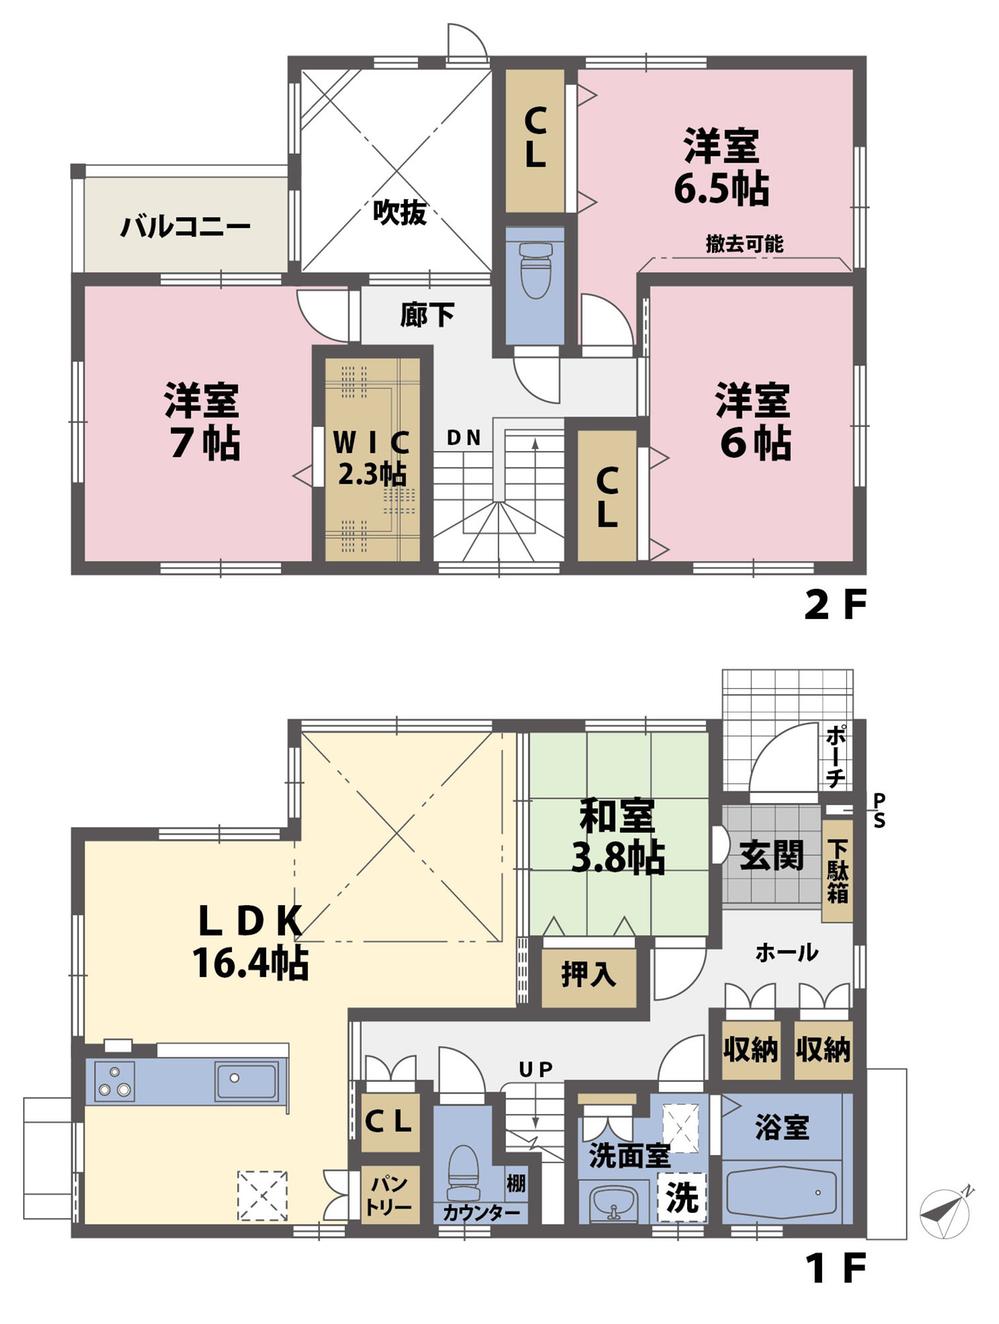 Floor plan. (No.1), Price 29,980,000 yen, 4LDK, Land area 121.89 sq m , Building area 103.9 sq m